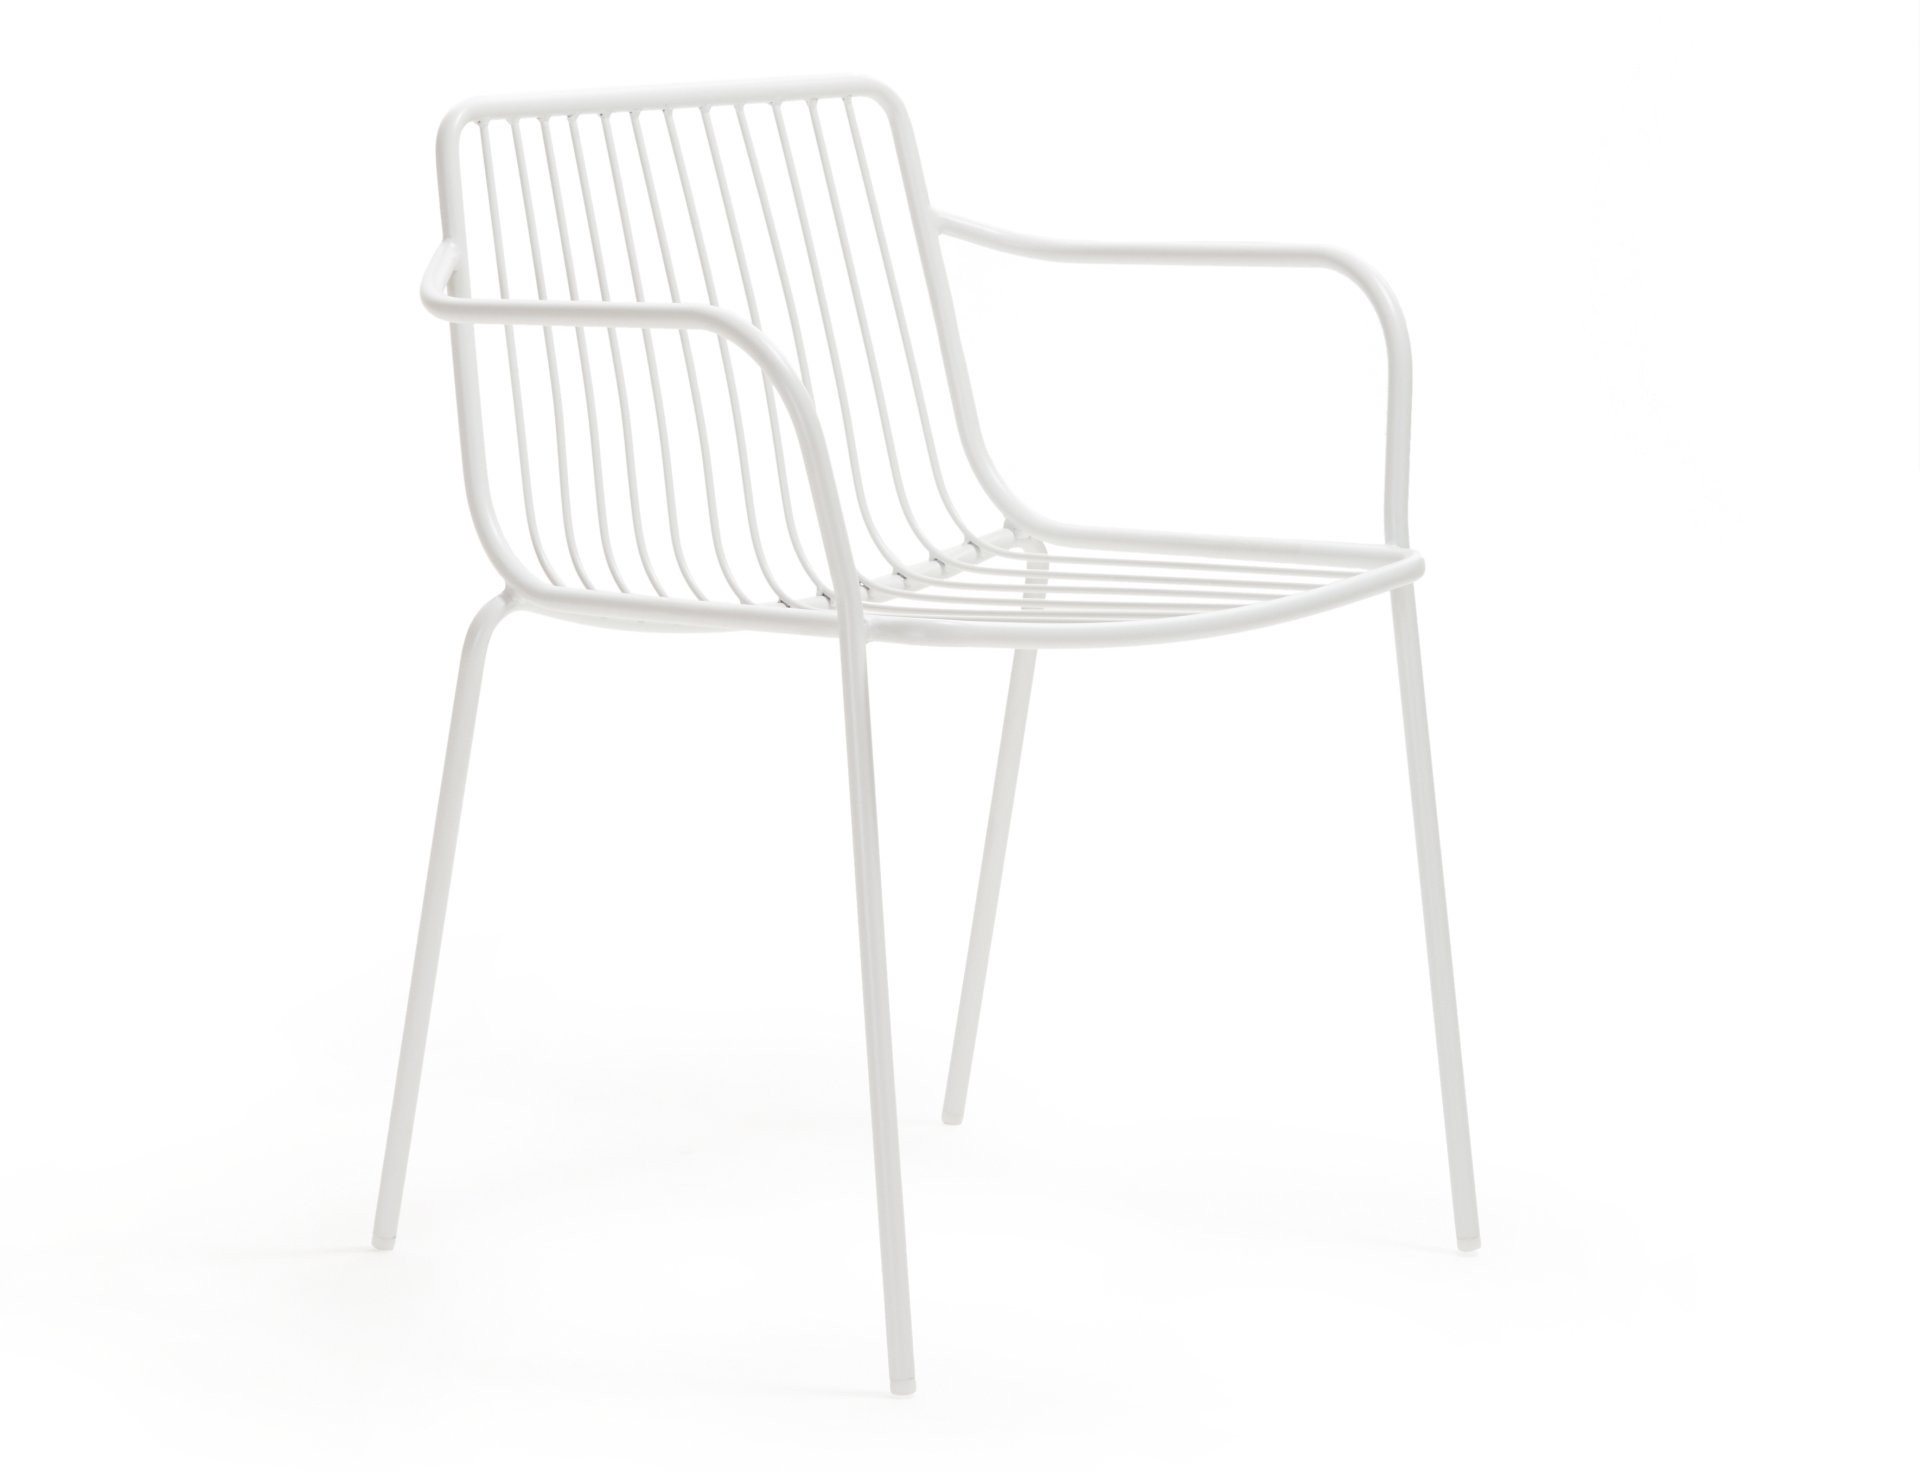 Stuhl weiß mit Armlehne Metall stapelbar, Gartenstuhl weiß Metall mit Armlehne